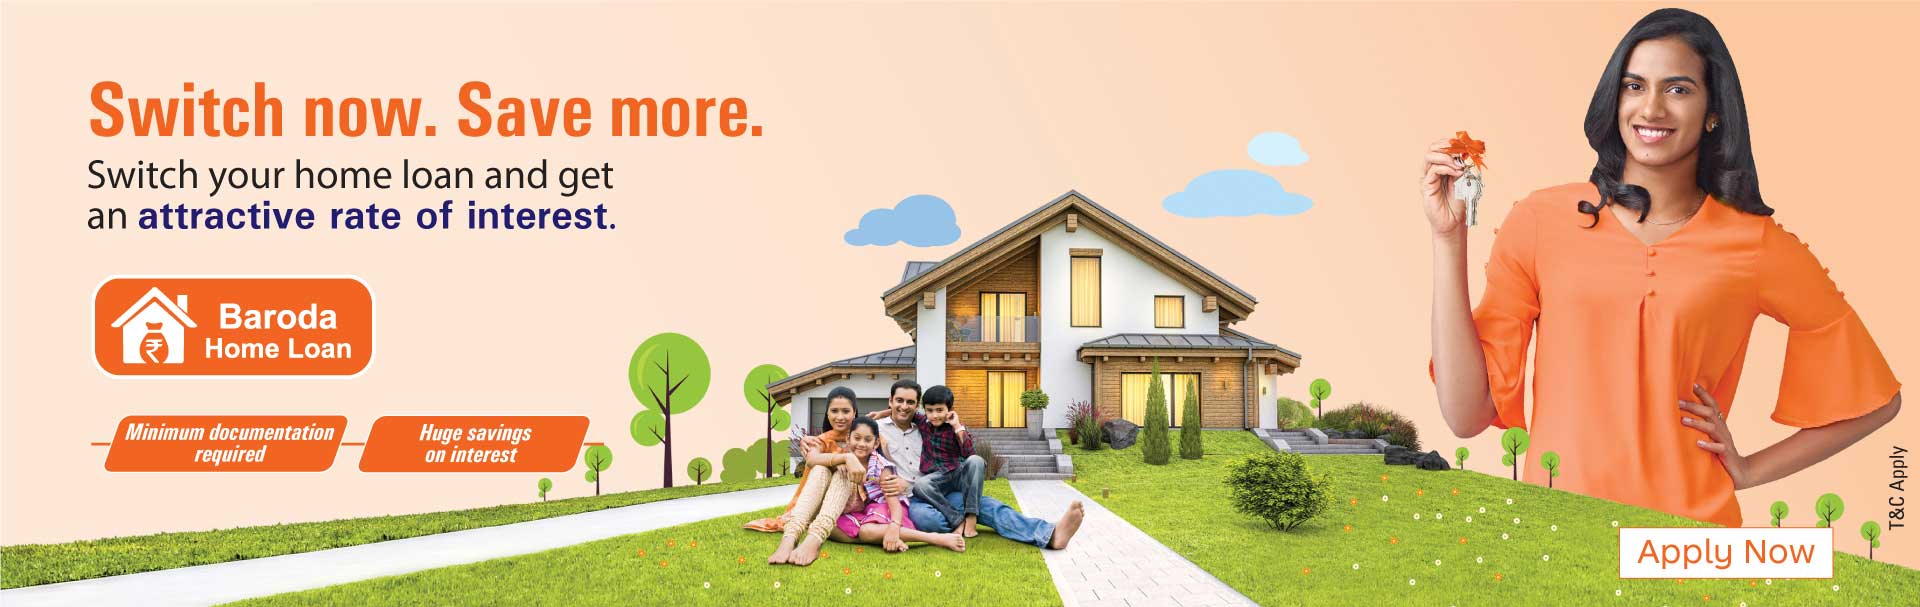 Baroda Home Loan Takeover Scheme